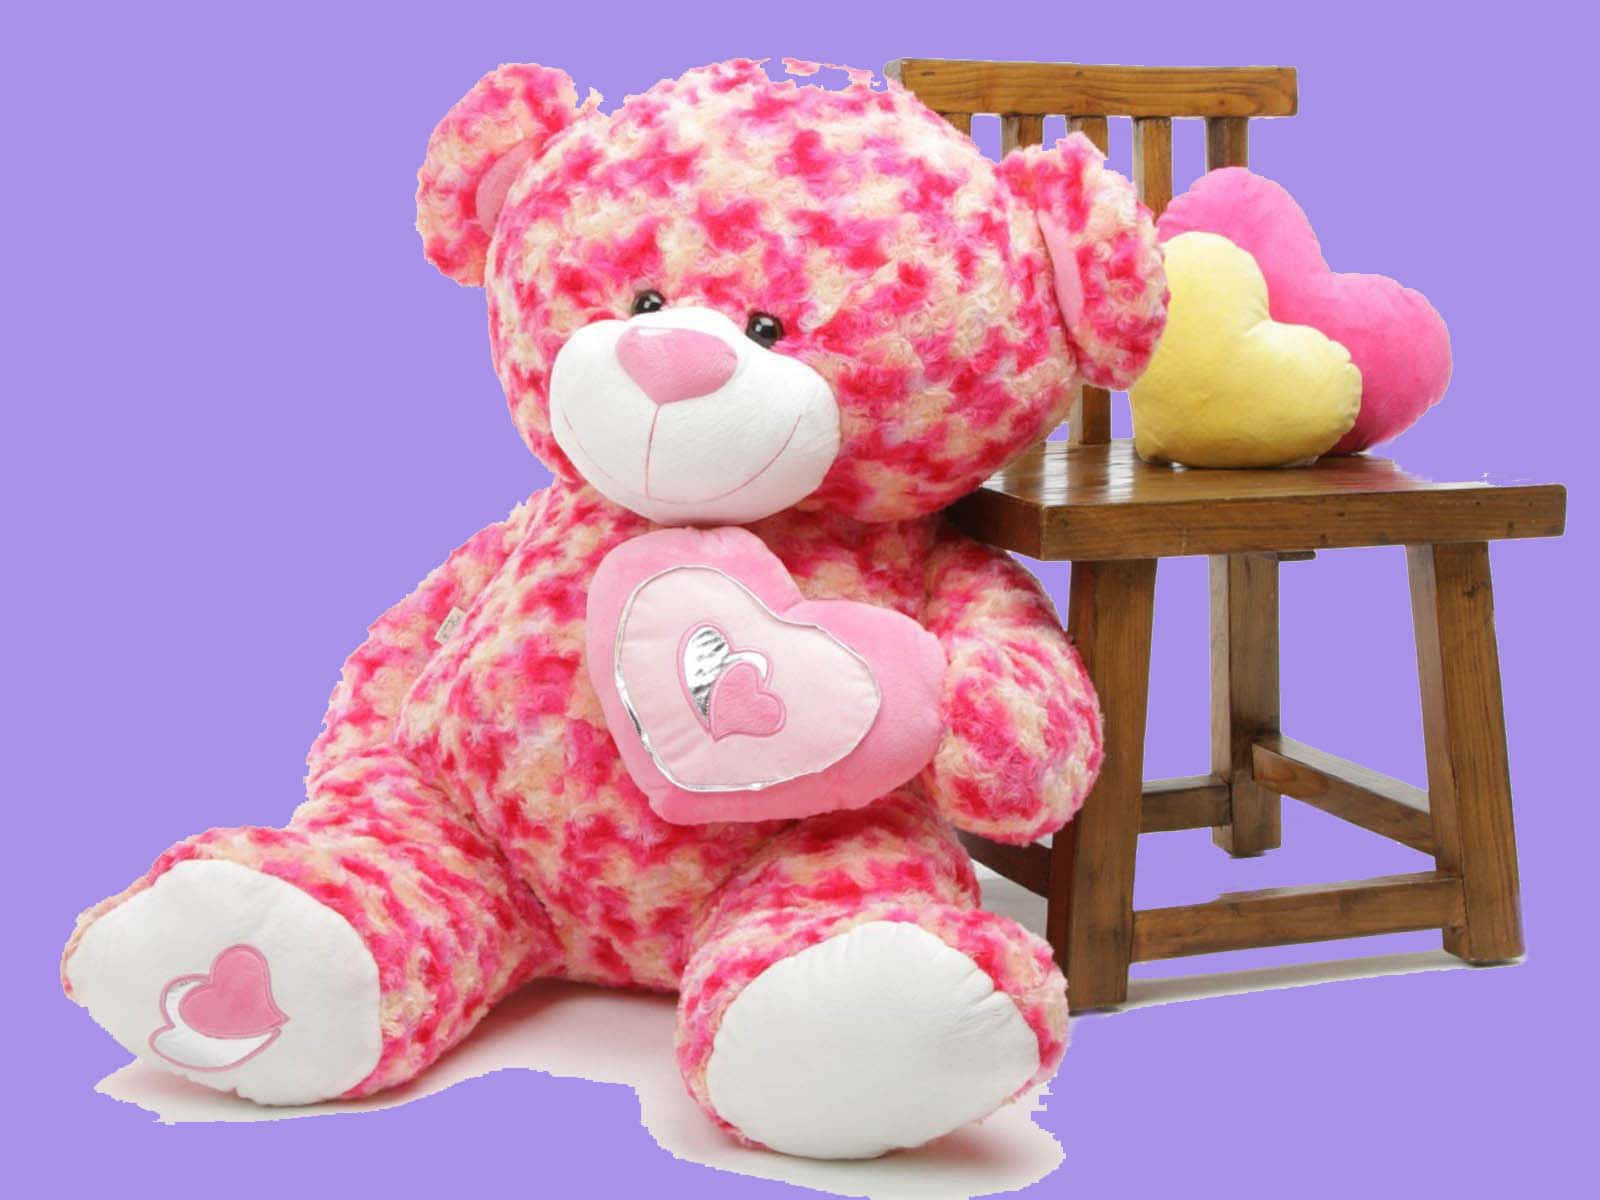 A Pink Teddy Bear